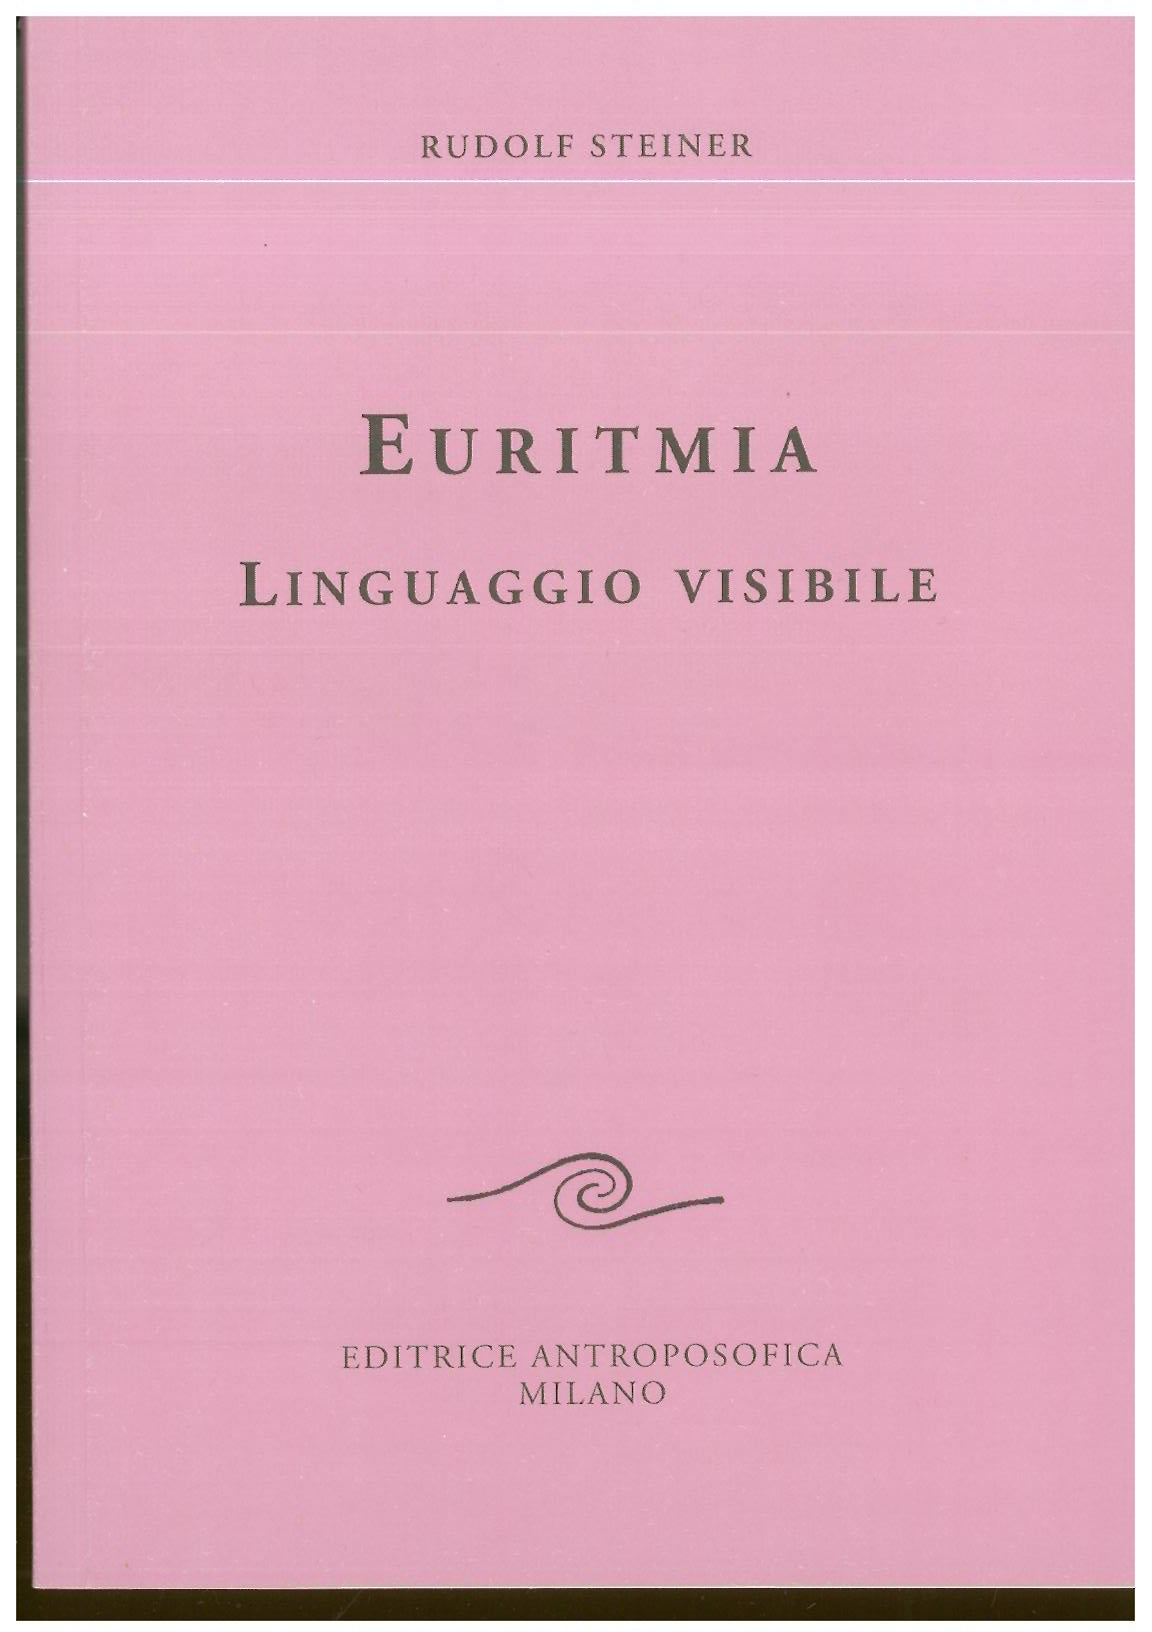 Euritmia linguaggio visibile - Rudolf Steiner